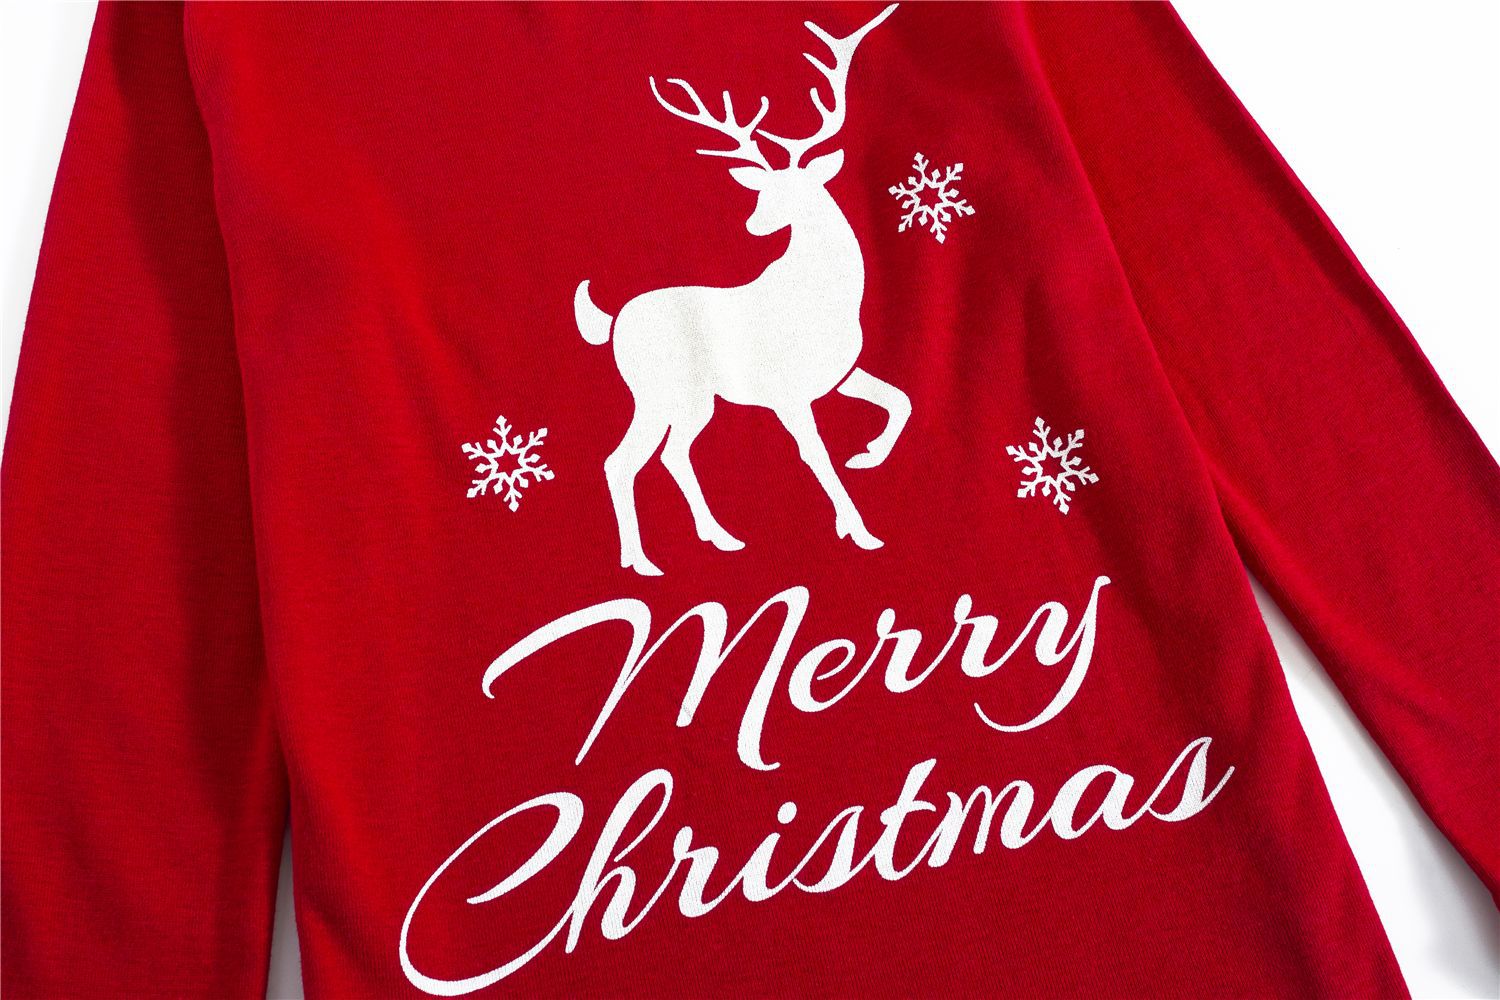 Merry Christmas Reindeer Print Christmas Family Black Pajamas Set